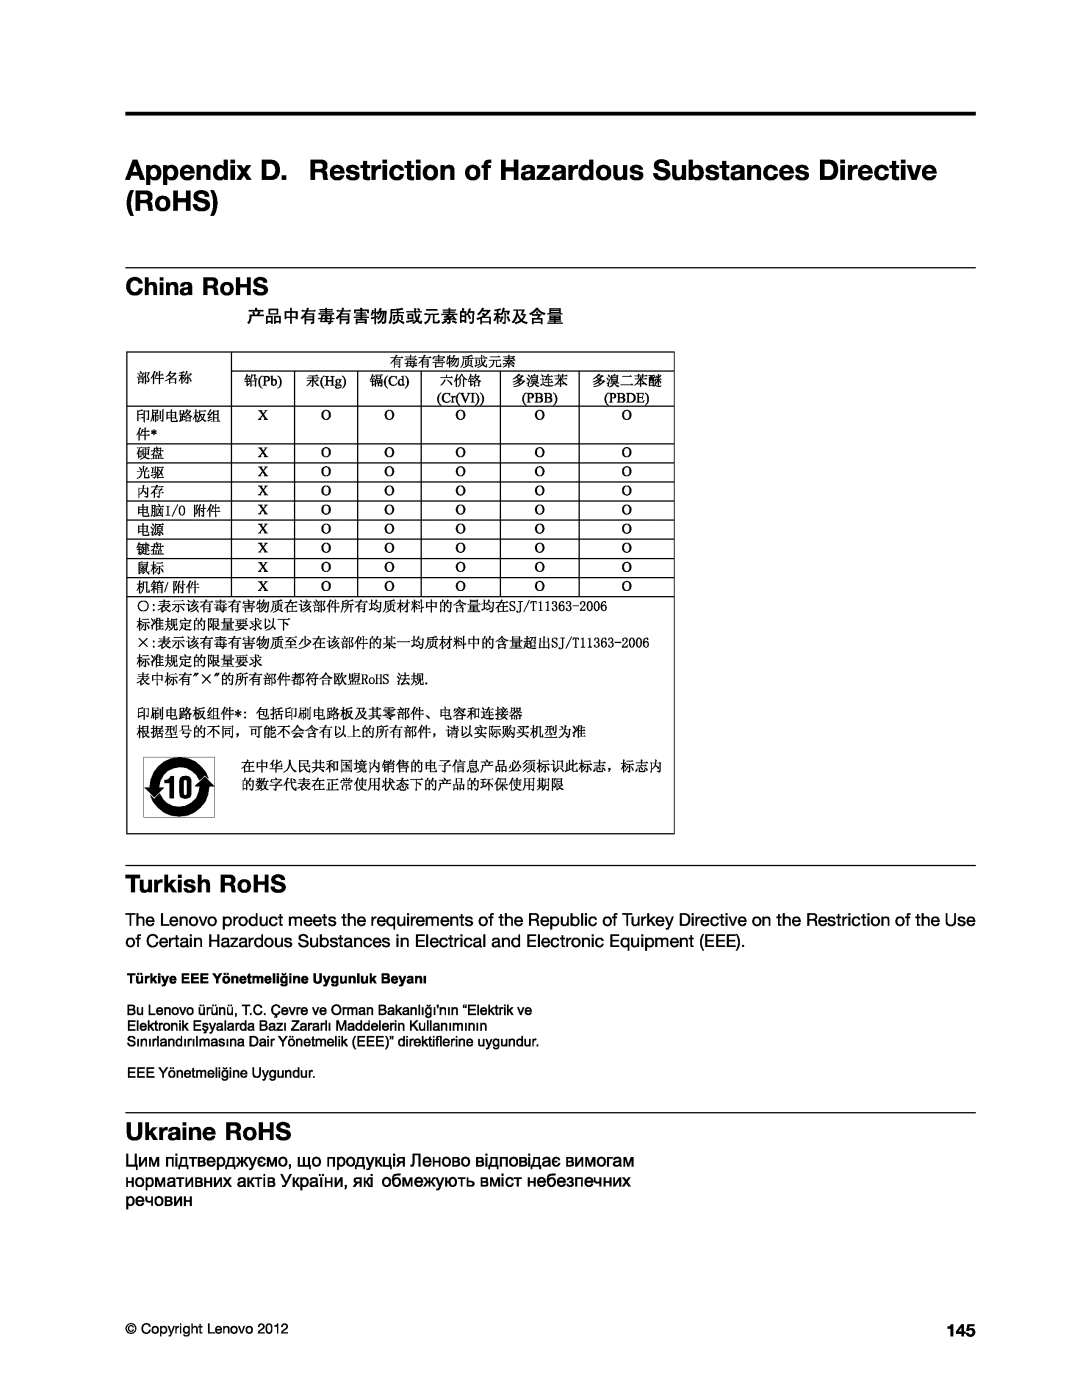 Lenovo X131E manual Appendix D. Restriction of Hazardous Substances Directive RoHS, China RoHS Turkish RoHS, Ukraine RoHS 